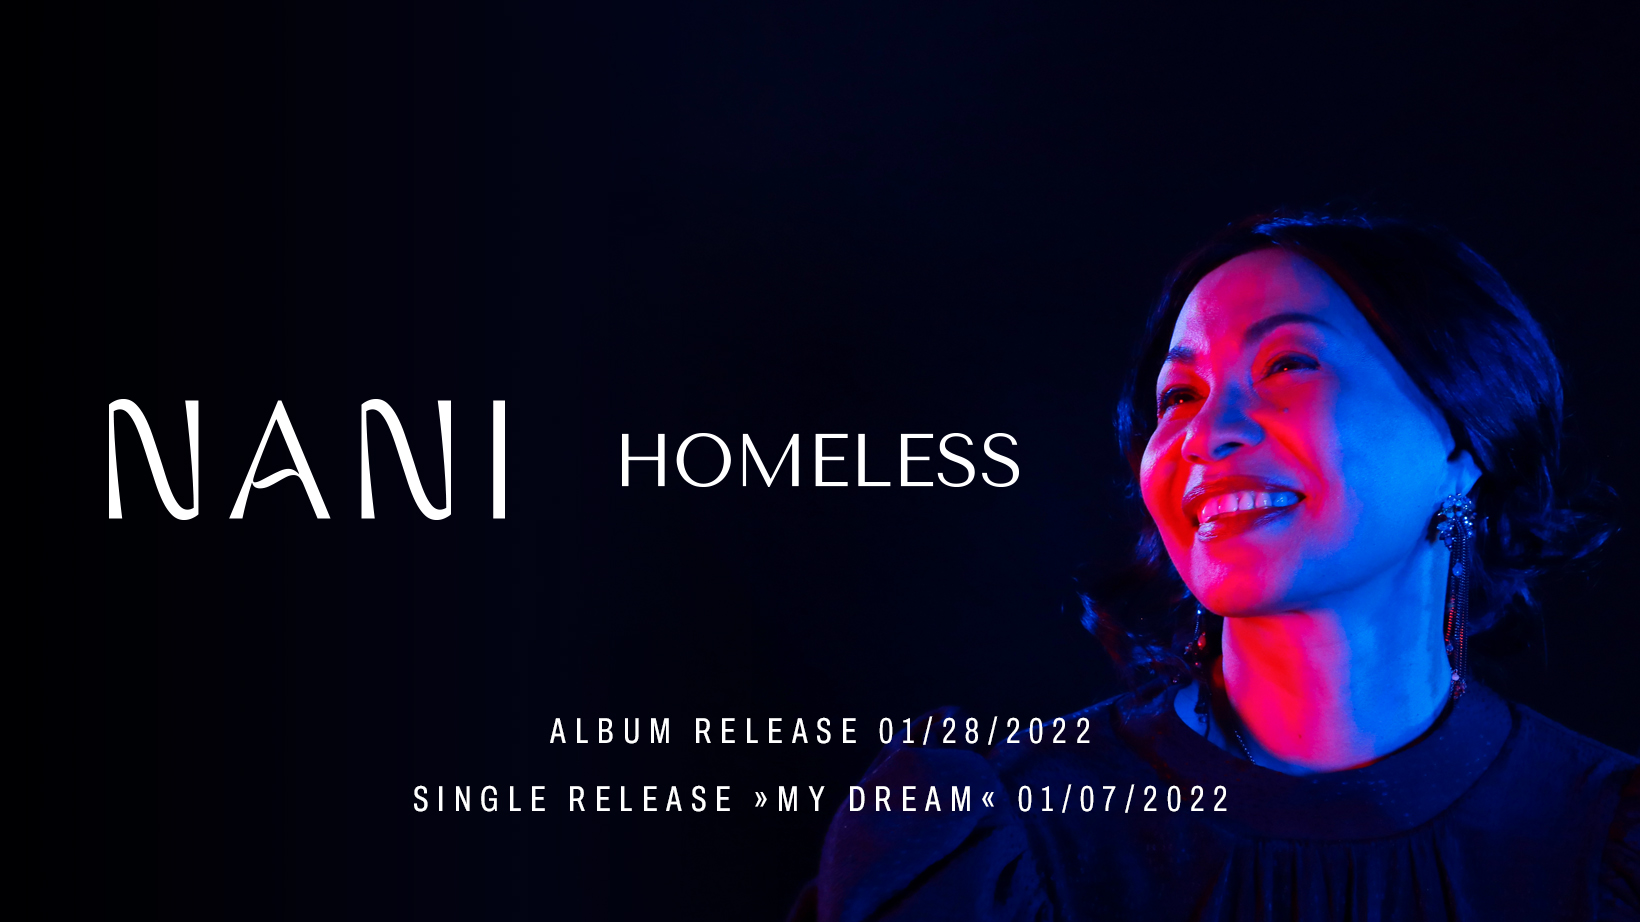 Nani Album Homeless Release 01/28/2022